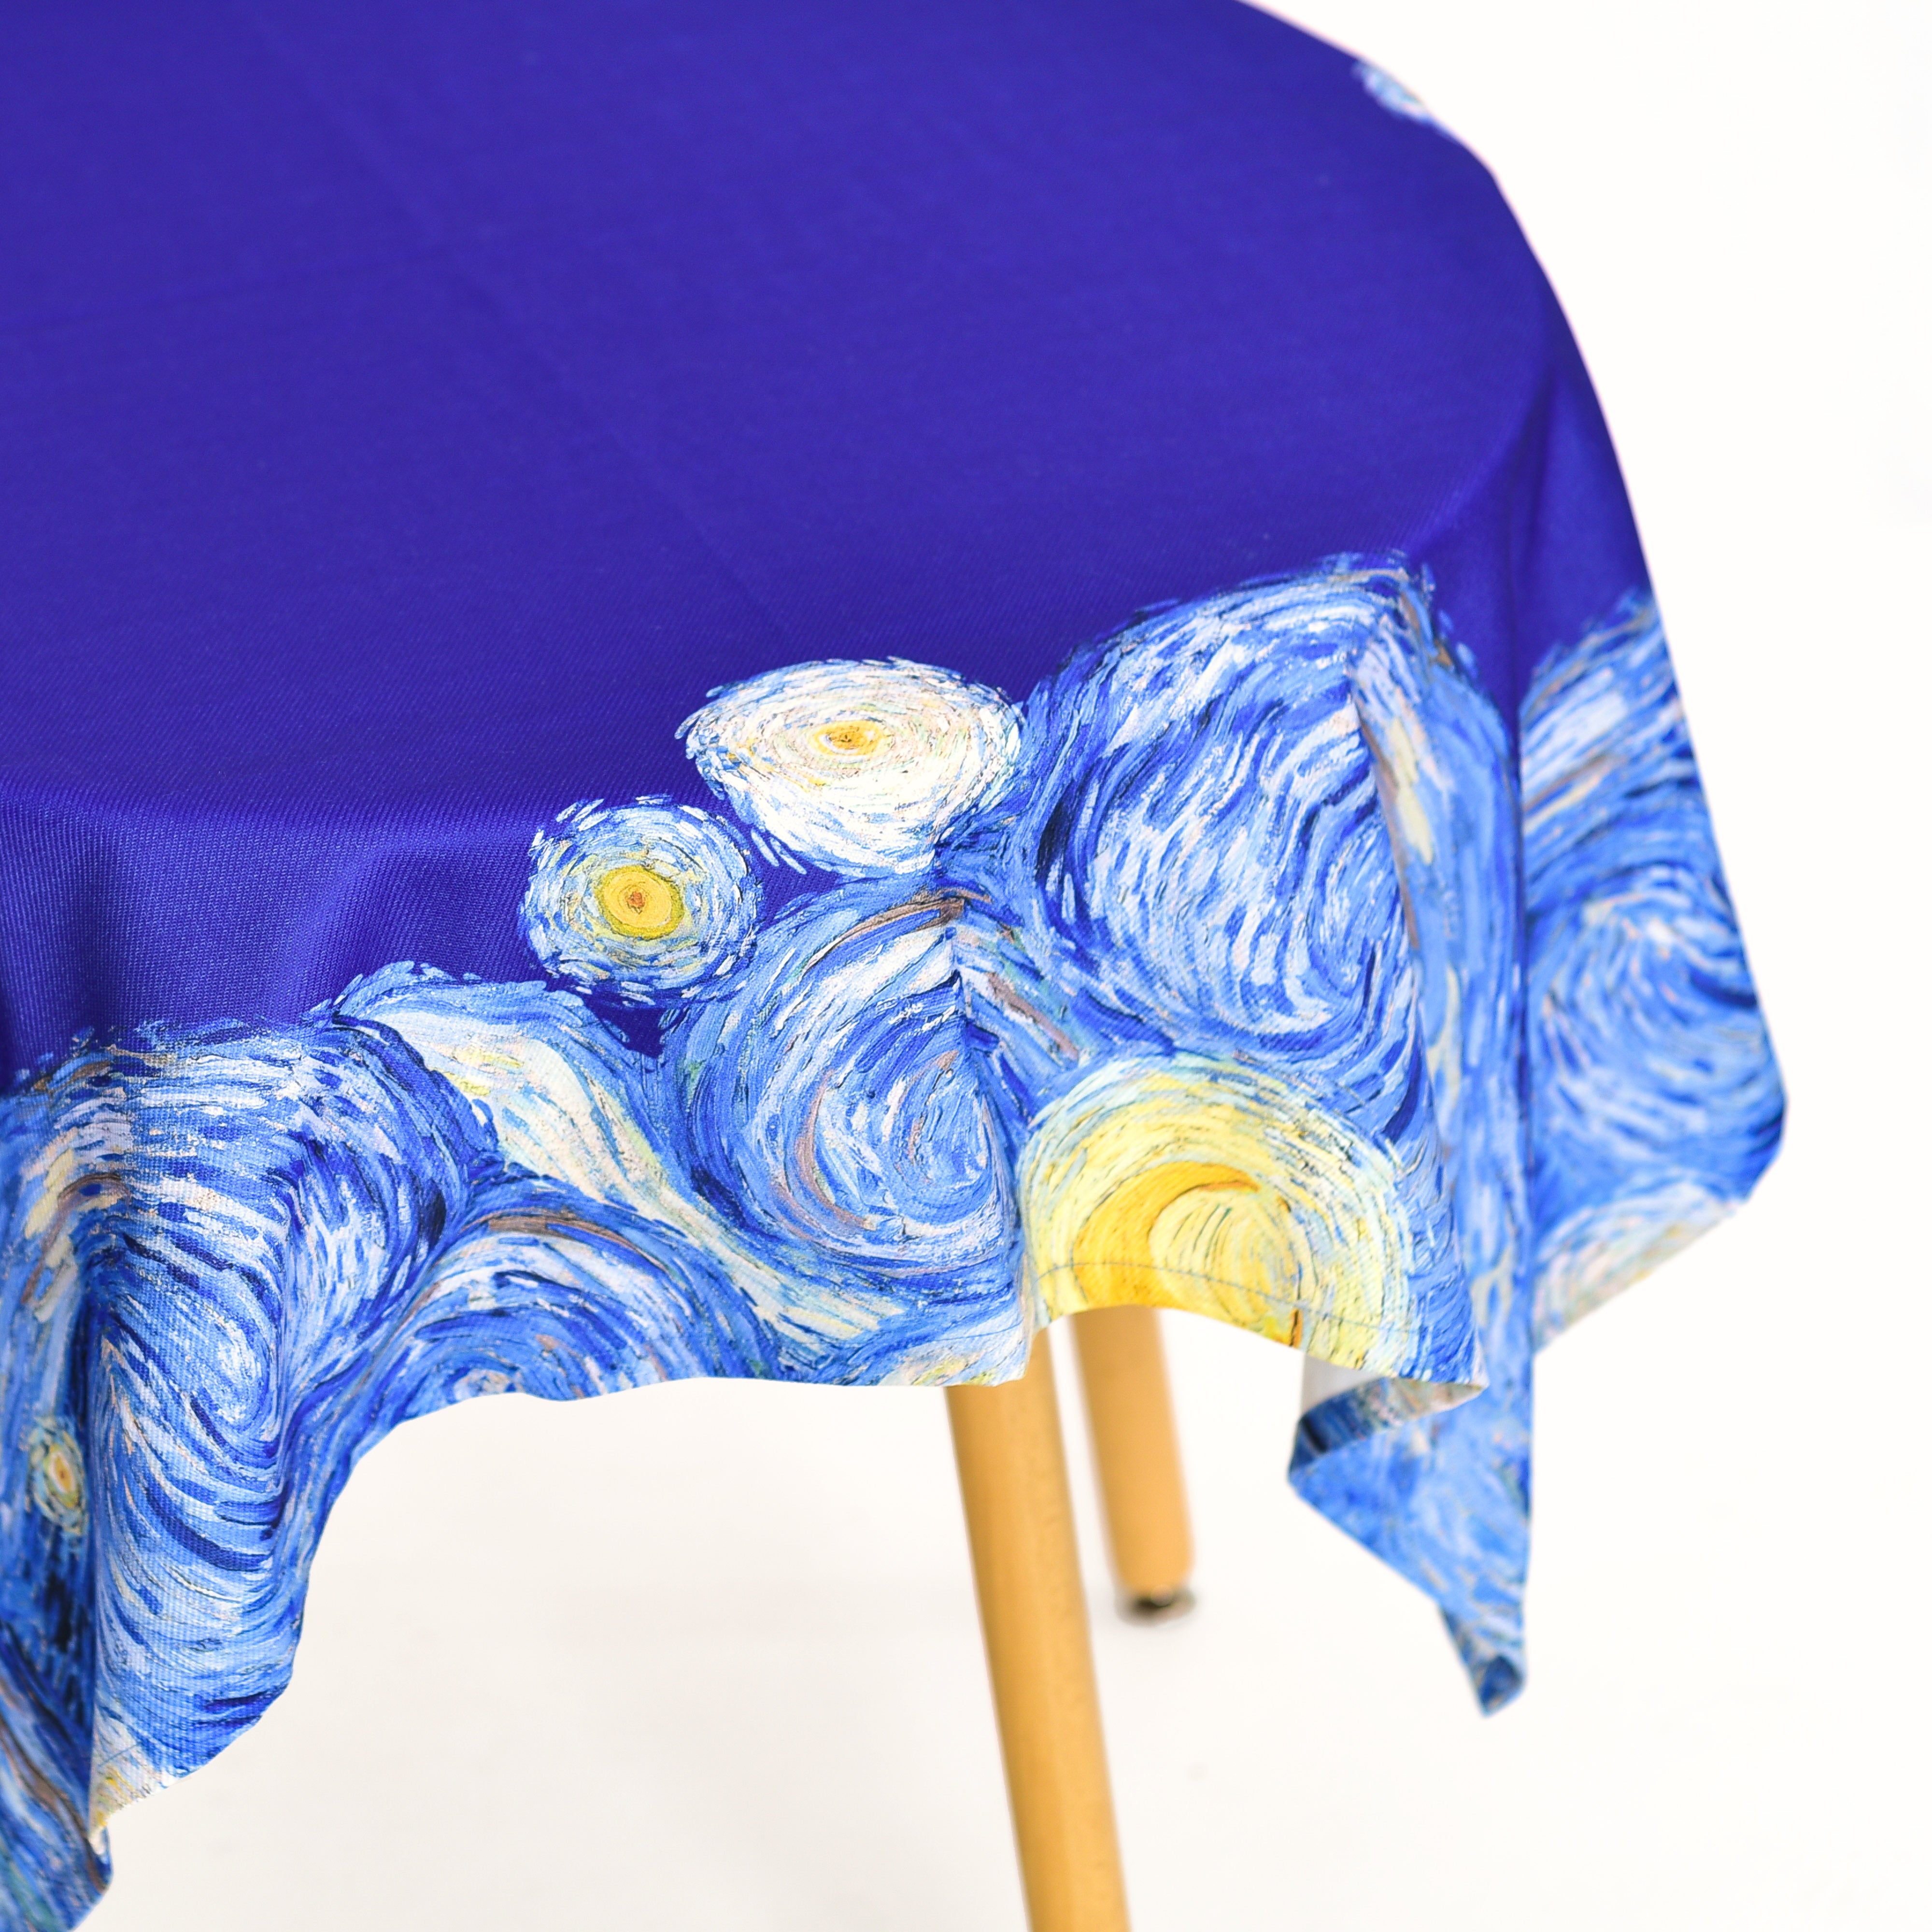 Staltiesė iš perdirbto audinio Vincent van Gogh "The Starry Night Pattern"